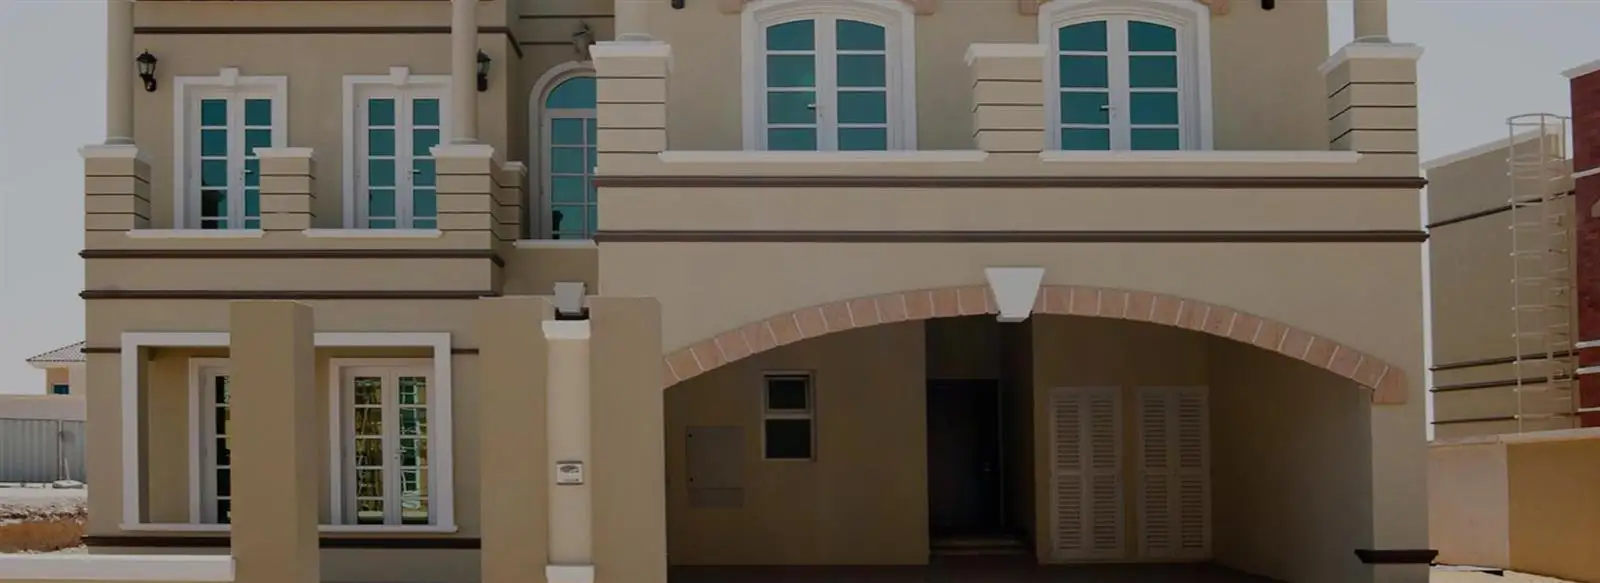 Gallery Villas at Dubai Sports City